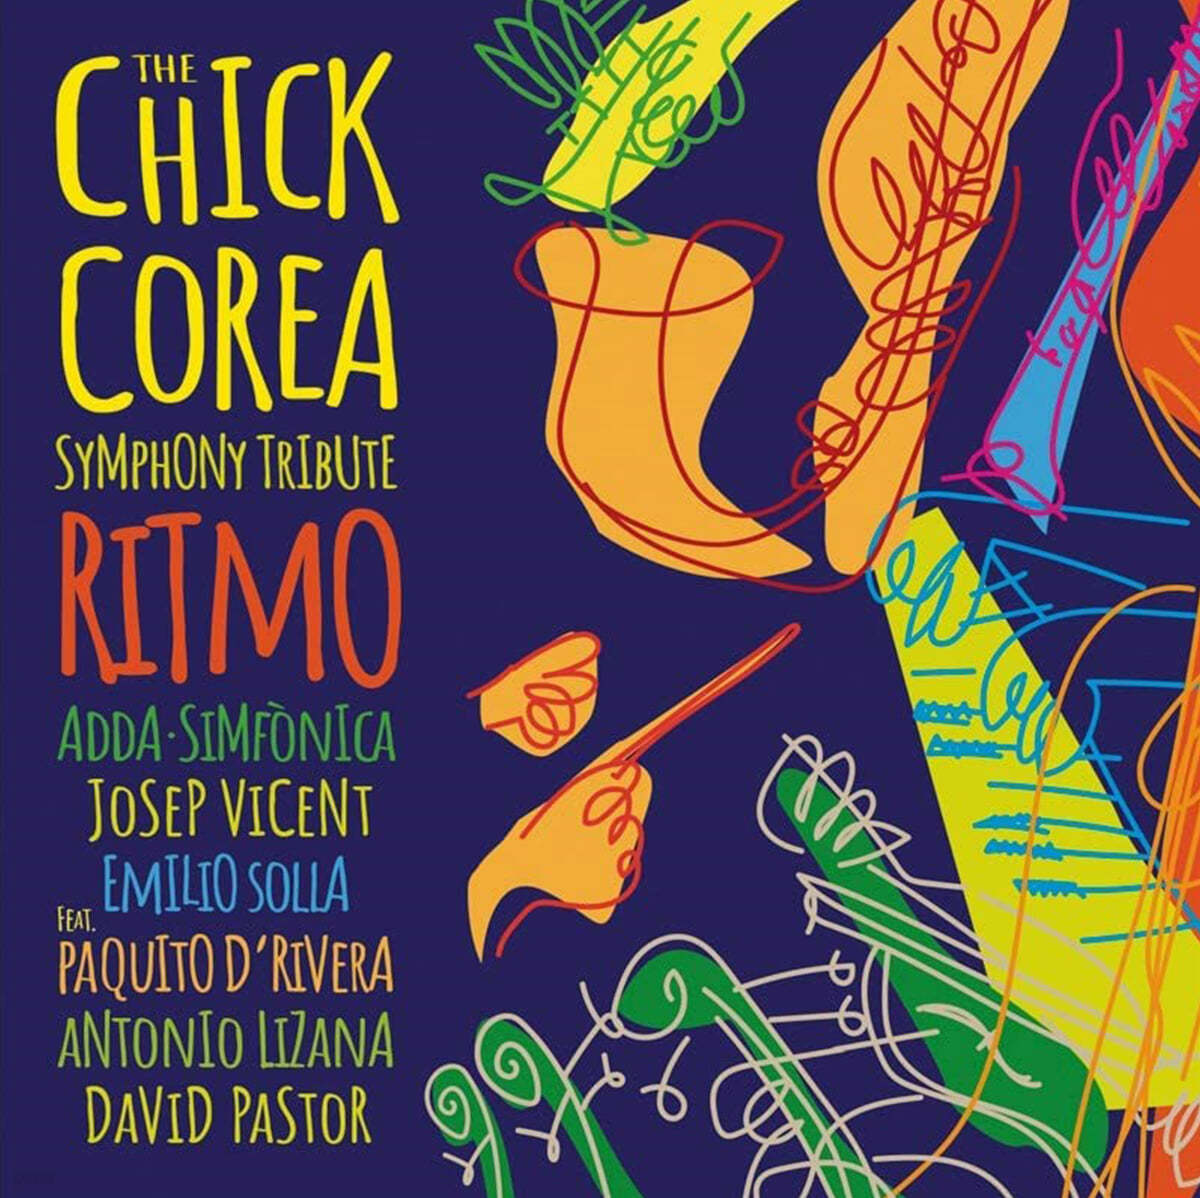 Joseph Vincent 관현악으로 듣는 칙 코리아 "리듬" (Ritmo - The Chick Corea Symphony Tribute)